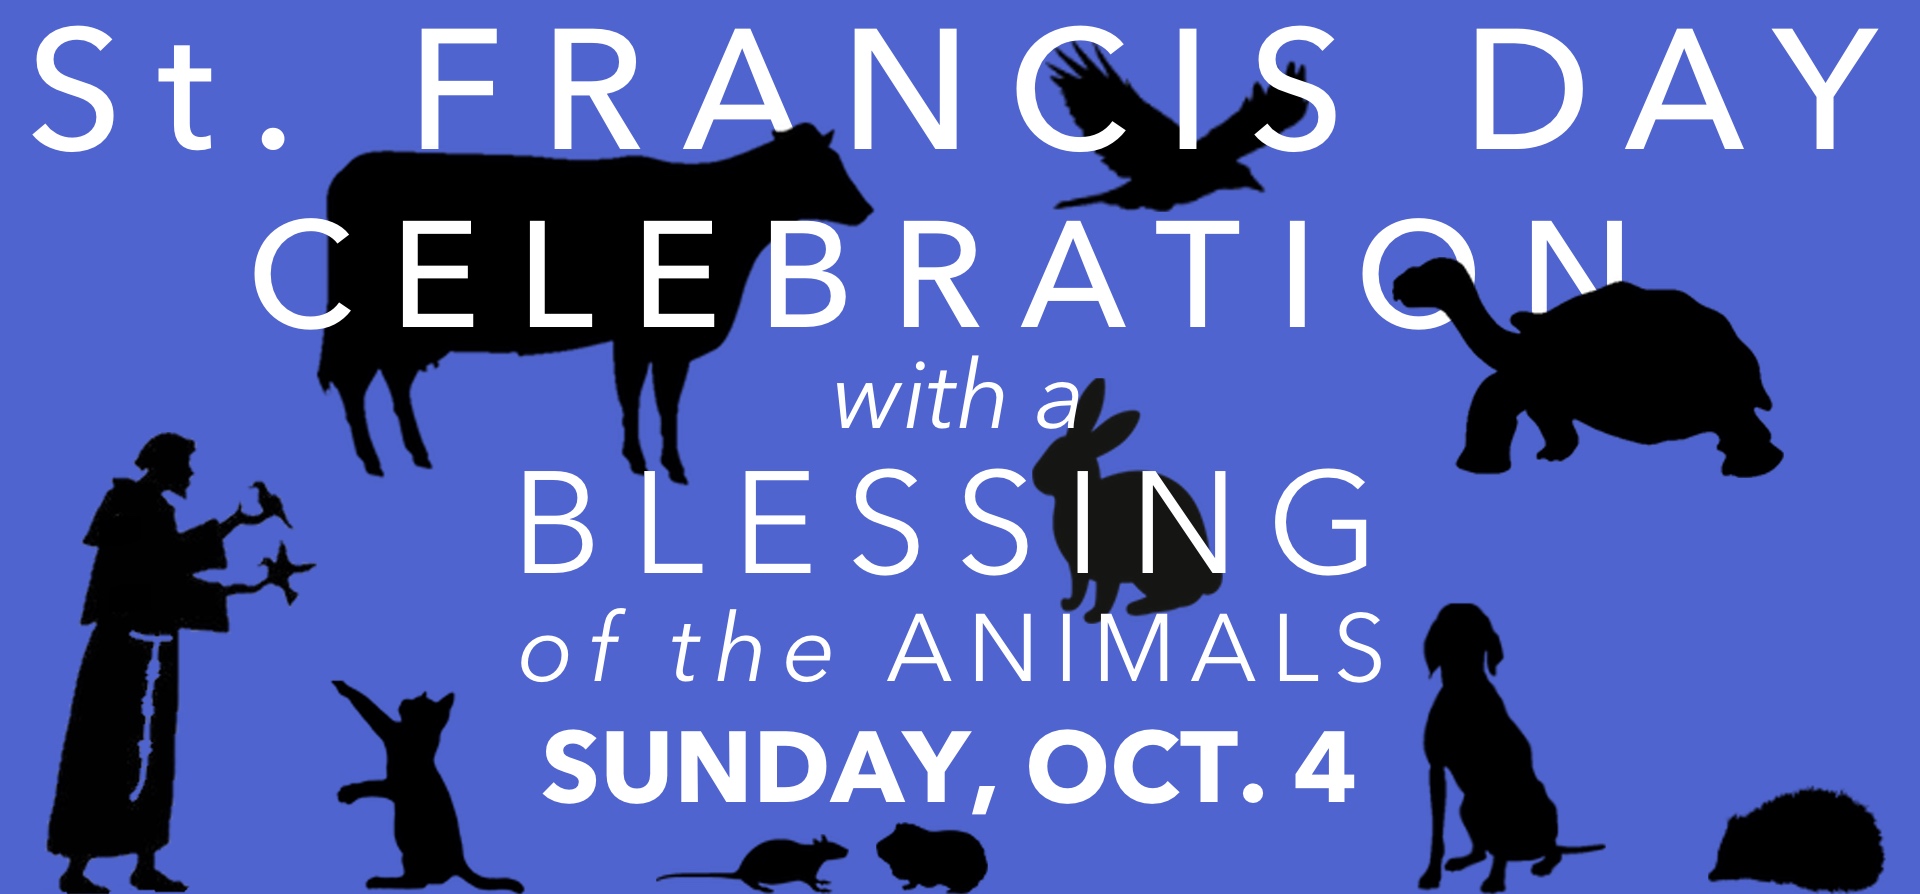 St. Francis Day Virtual Celebration All Saints Episcopal Church